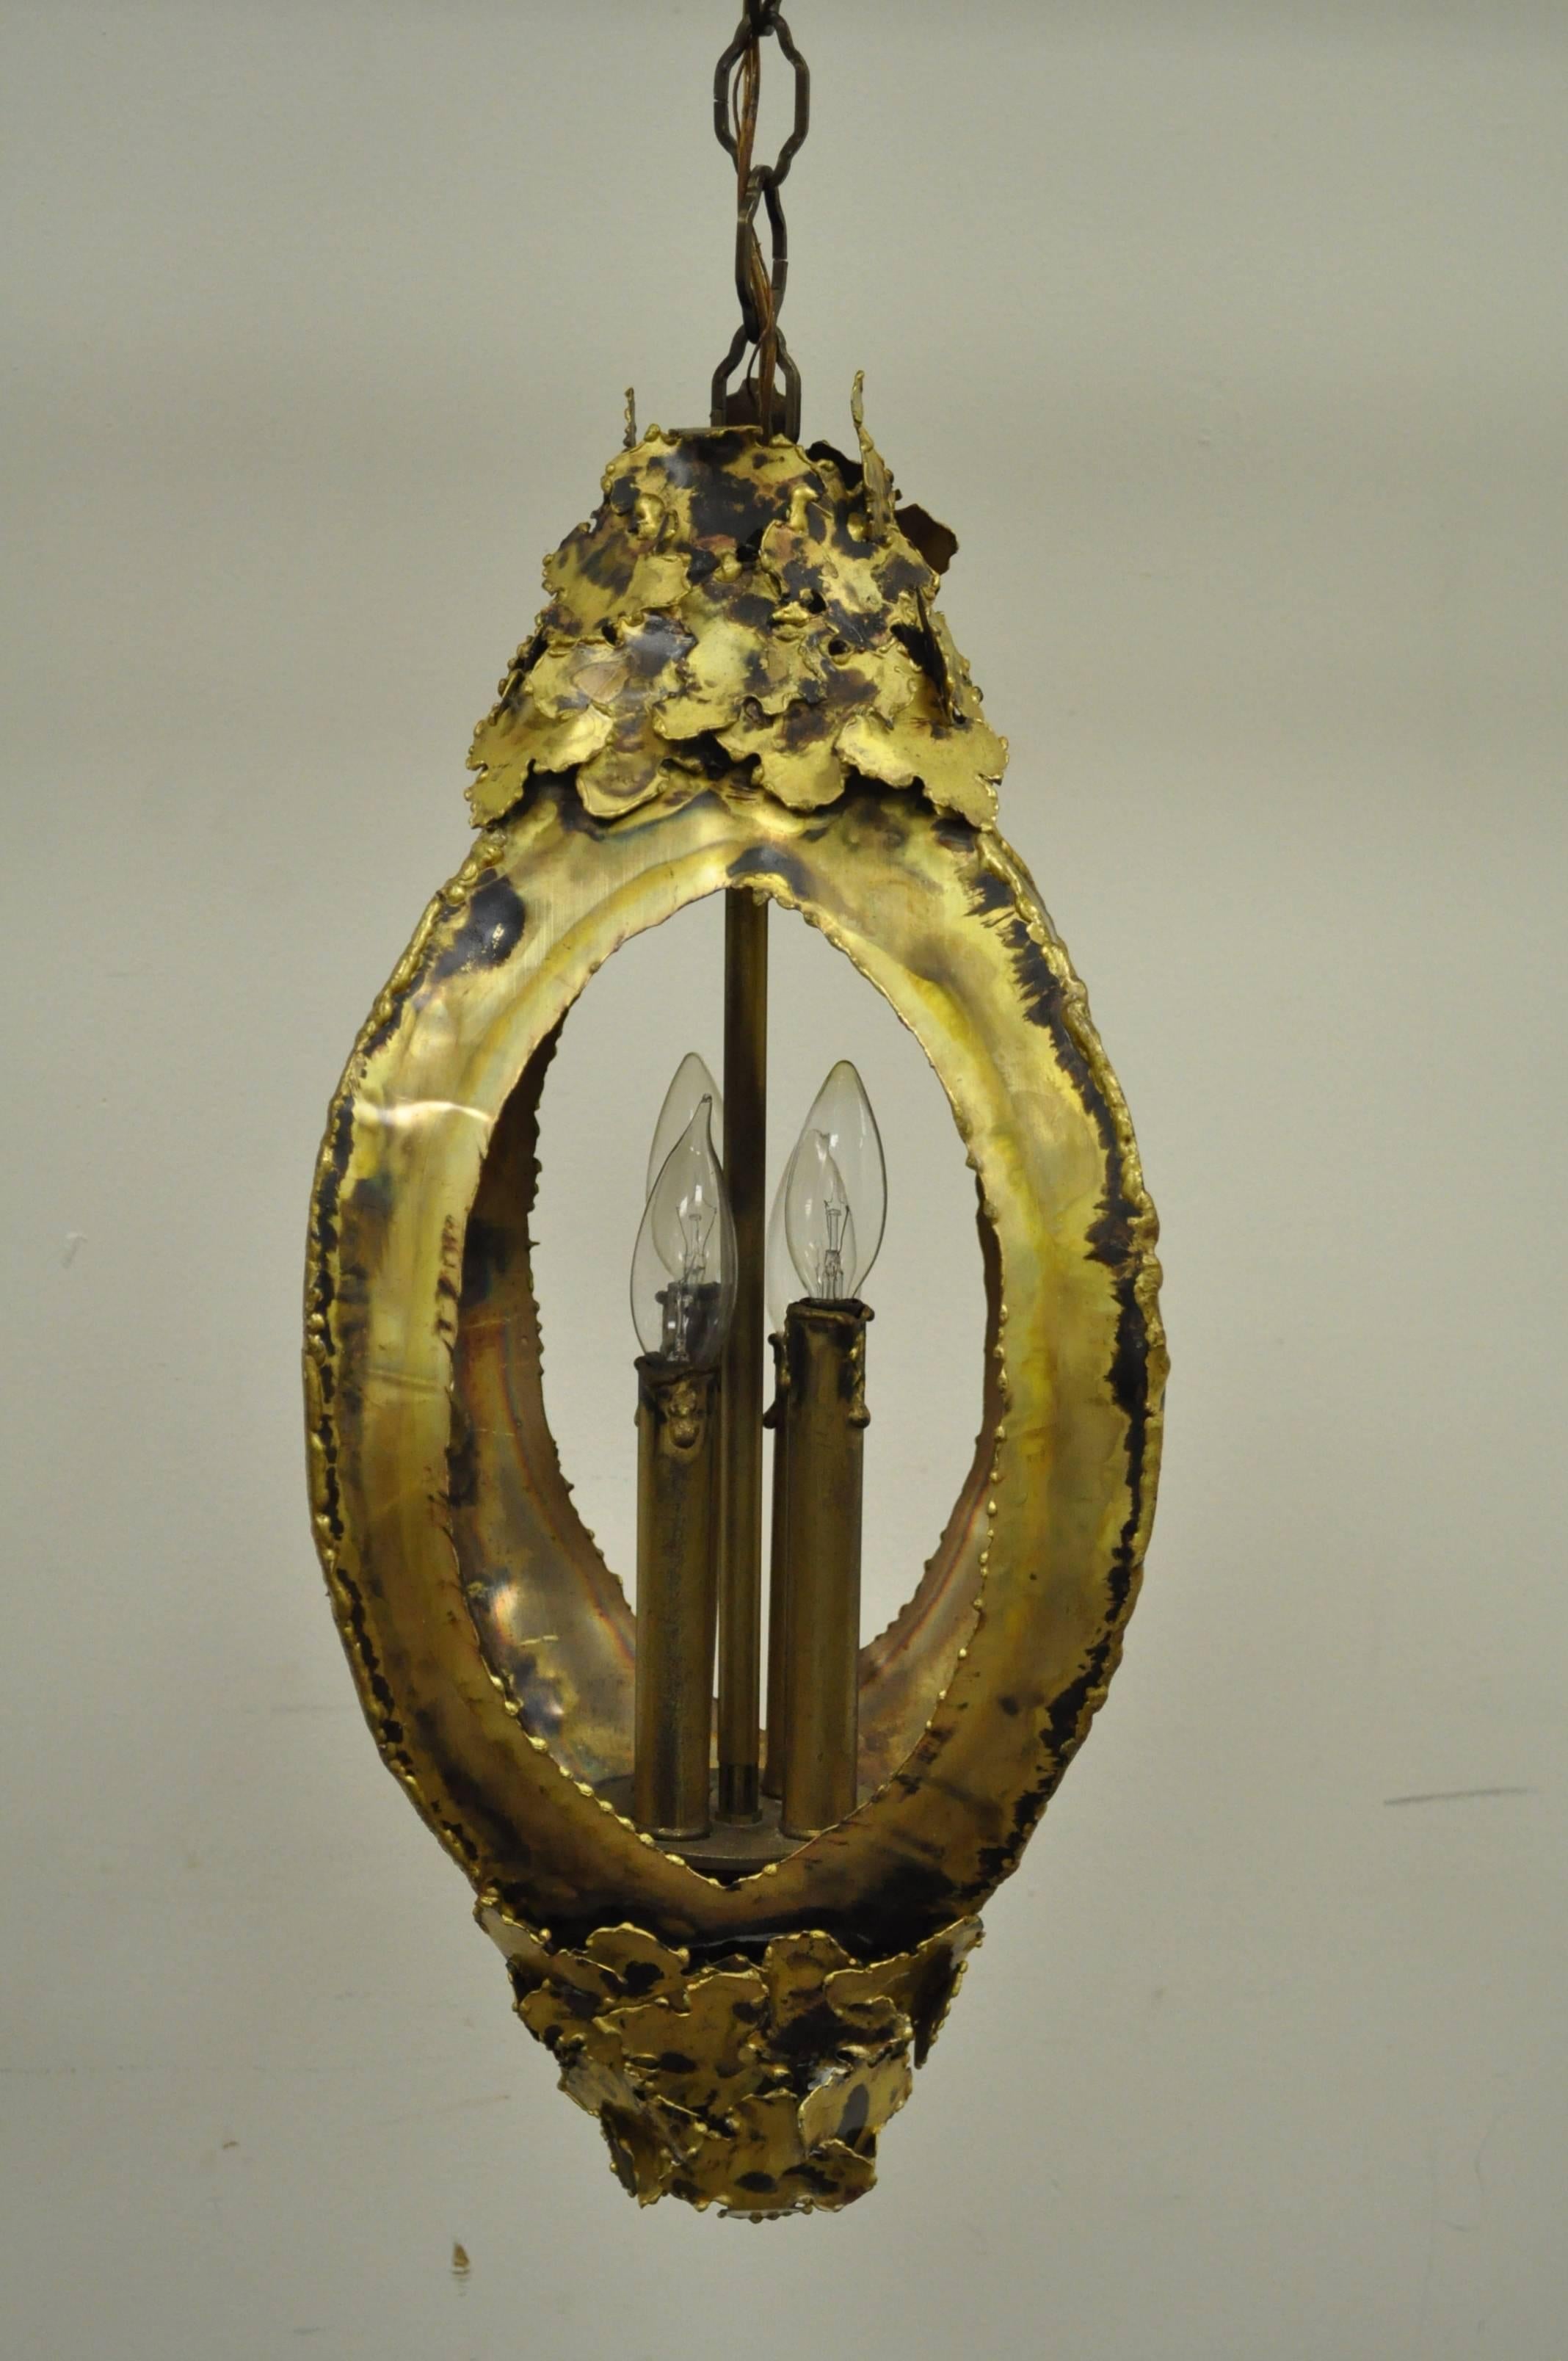 Vintage, Mid-Century Modern, Brutalist lantern pendant designed by Tom Greene for Feldman with four interior lights.